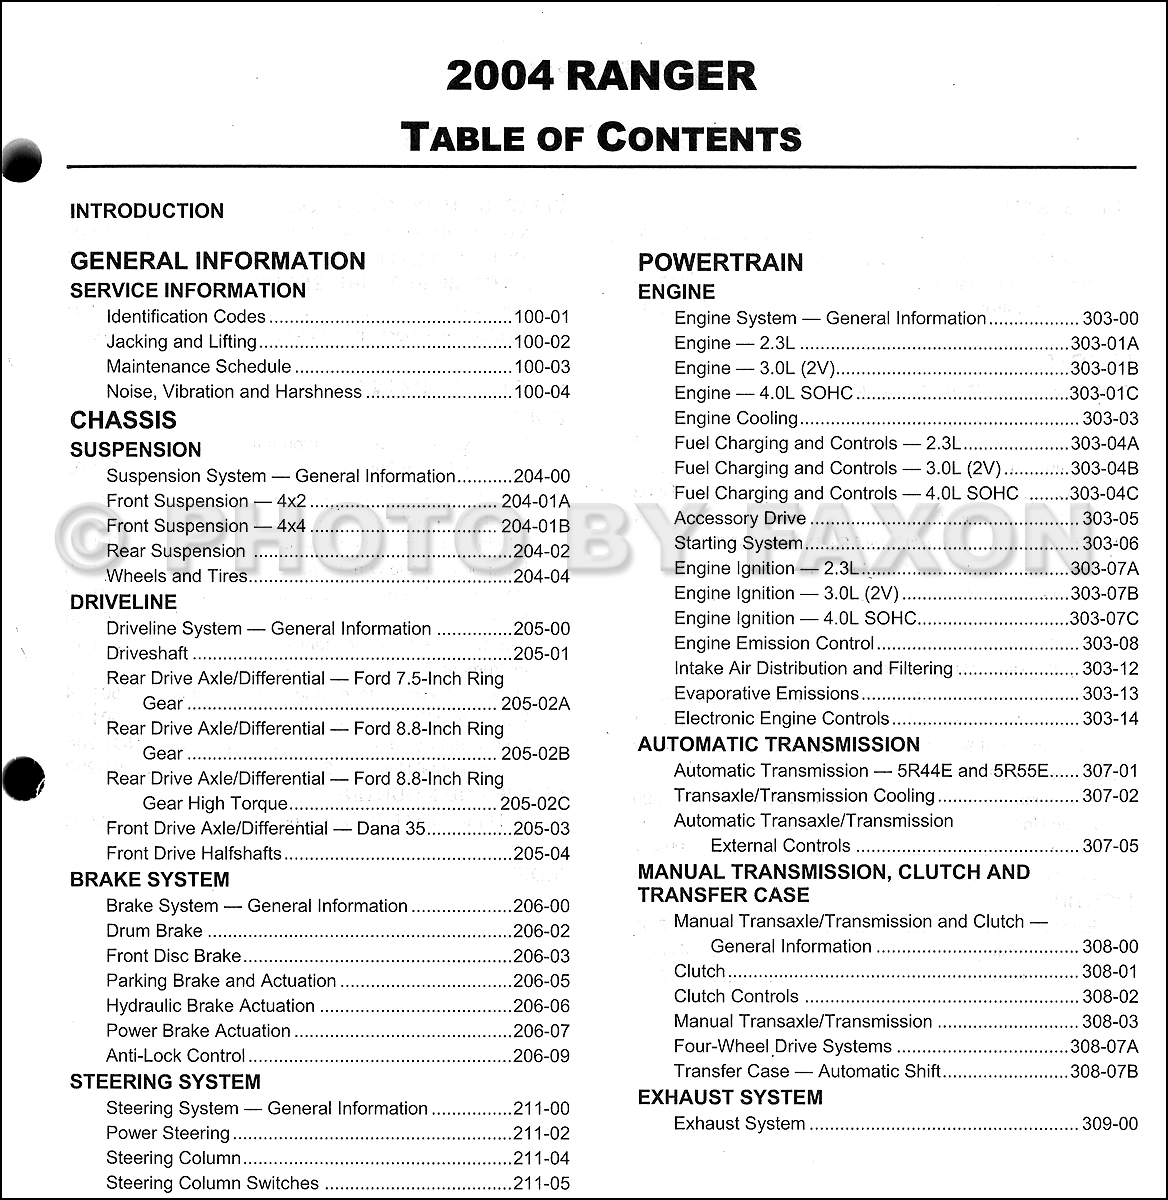 2004 Ford ranger service manual